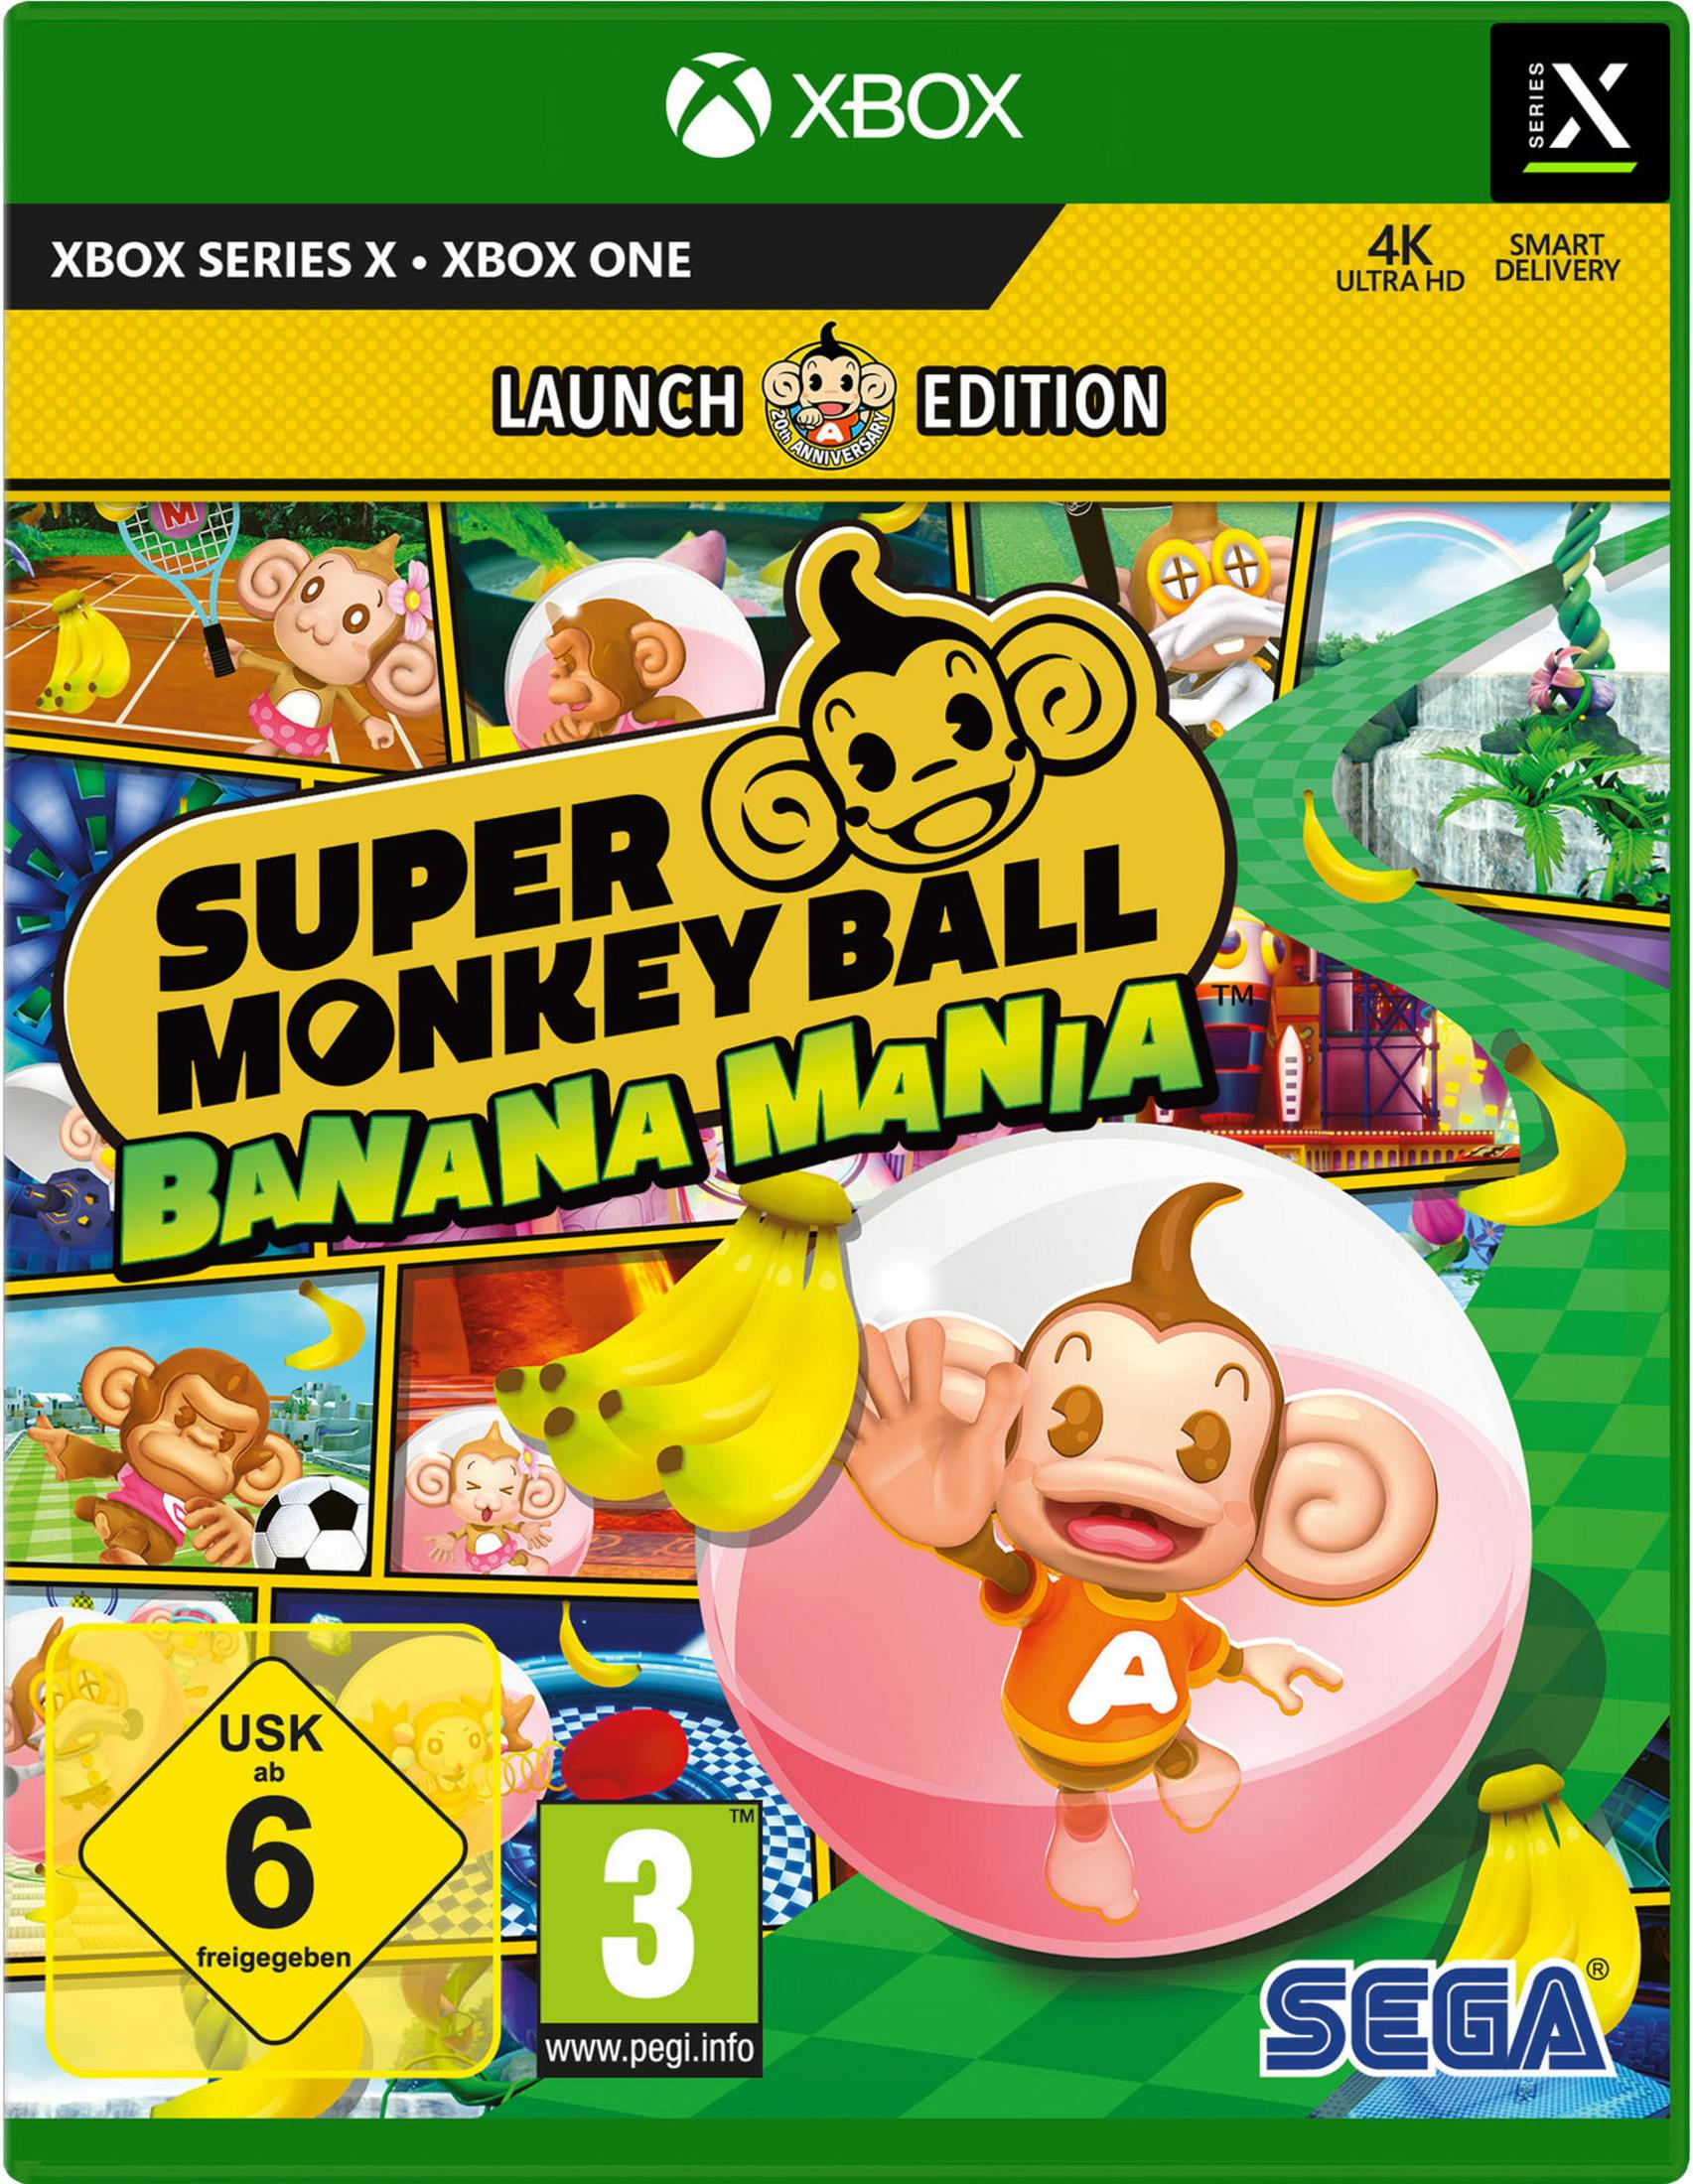 Super Monkey Ball Banana - Edition) (Launch [Xbox Mania One